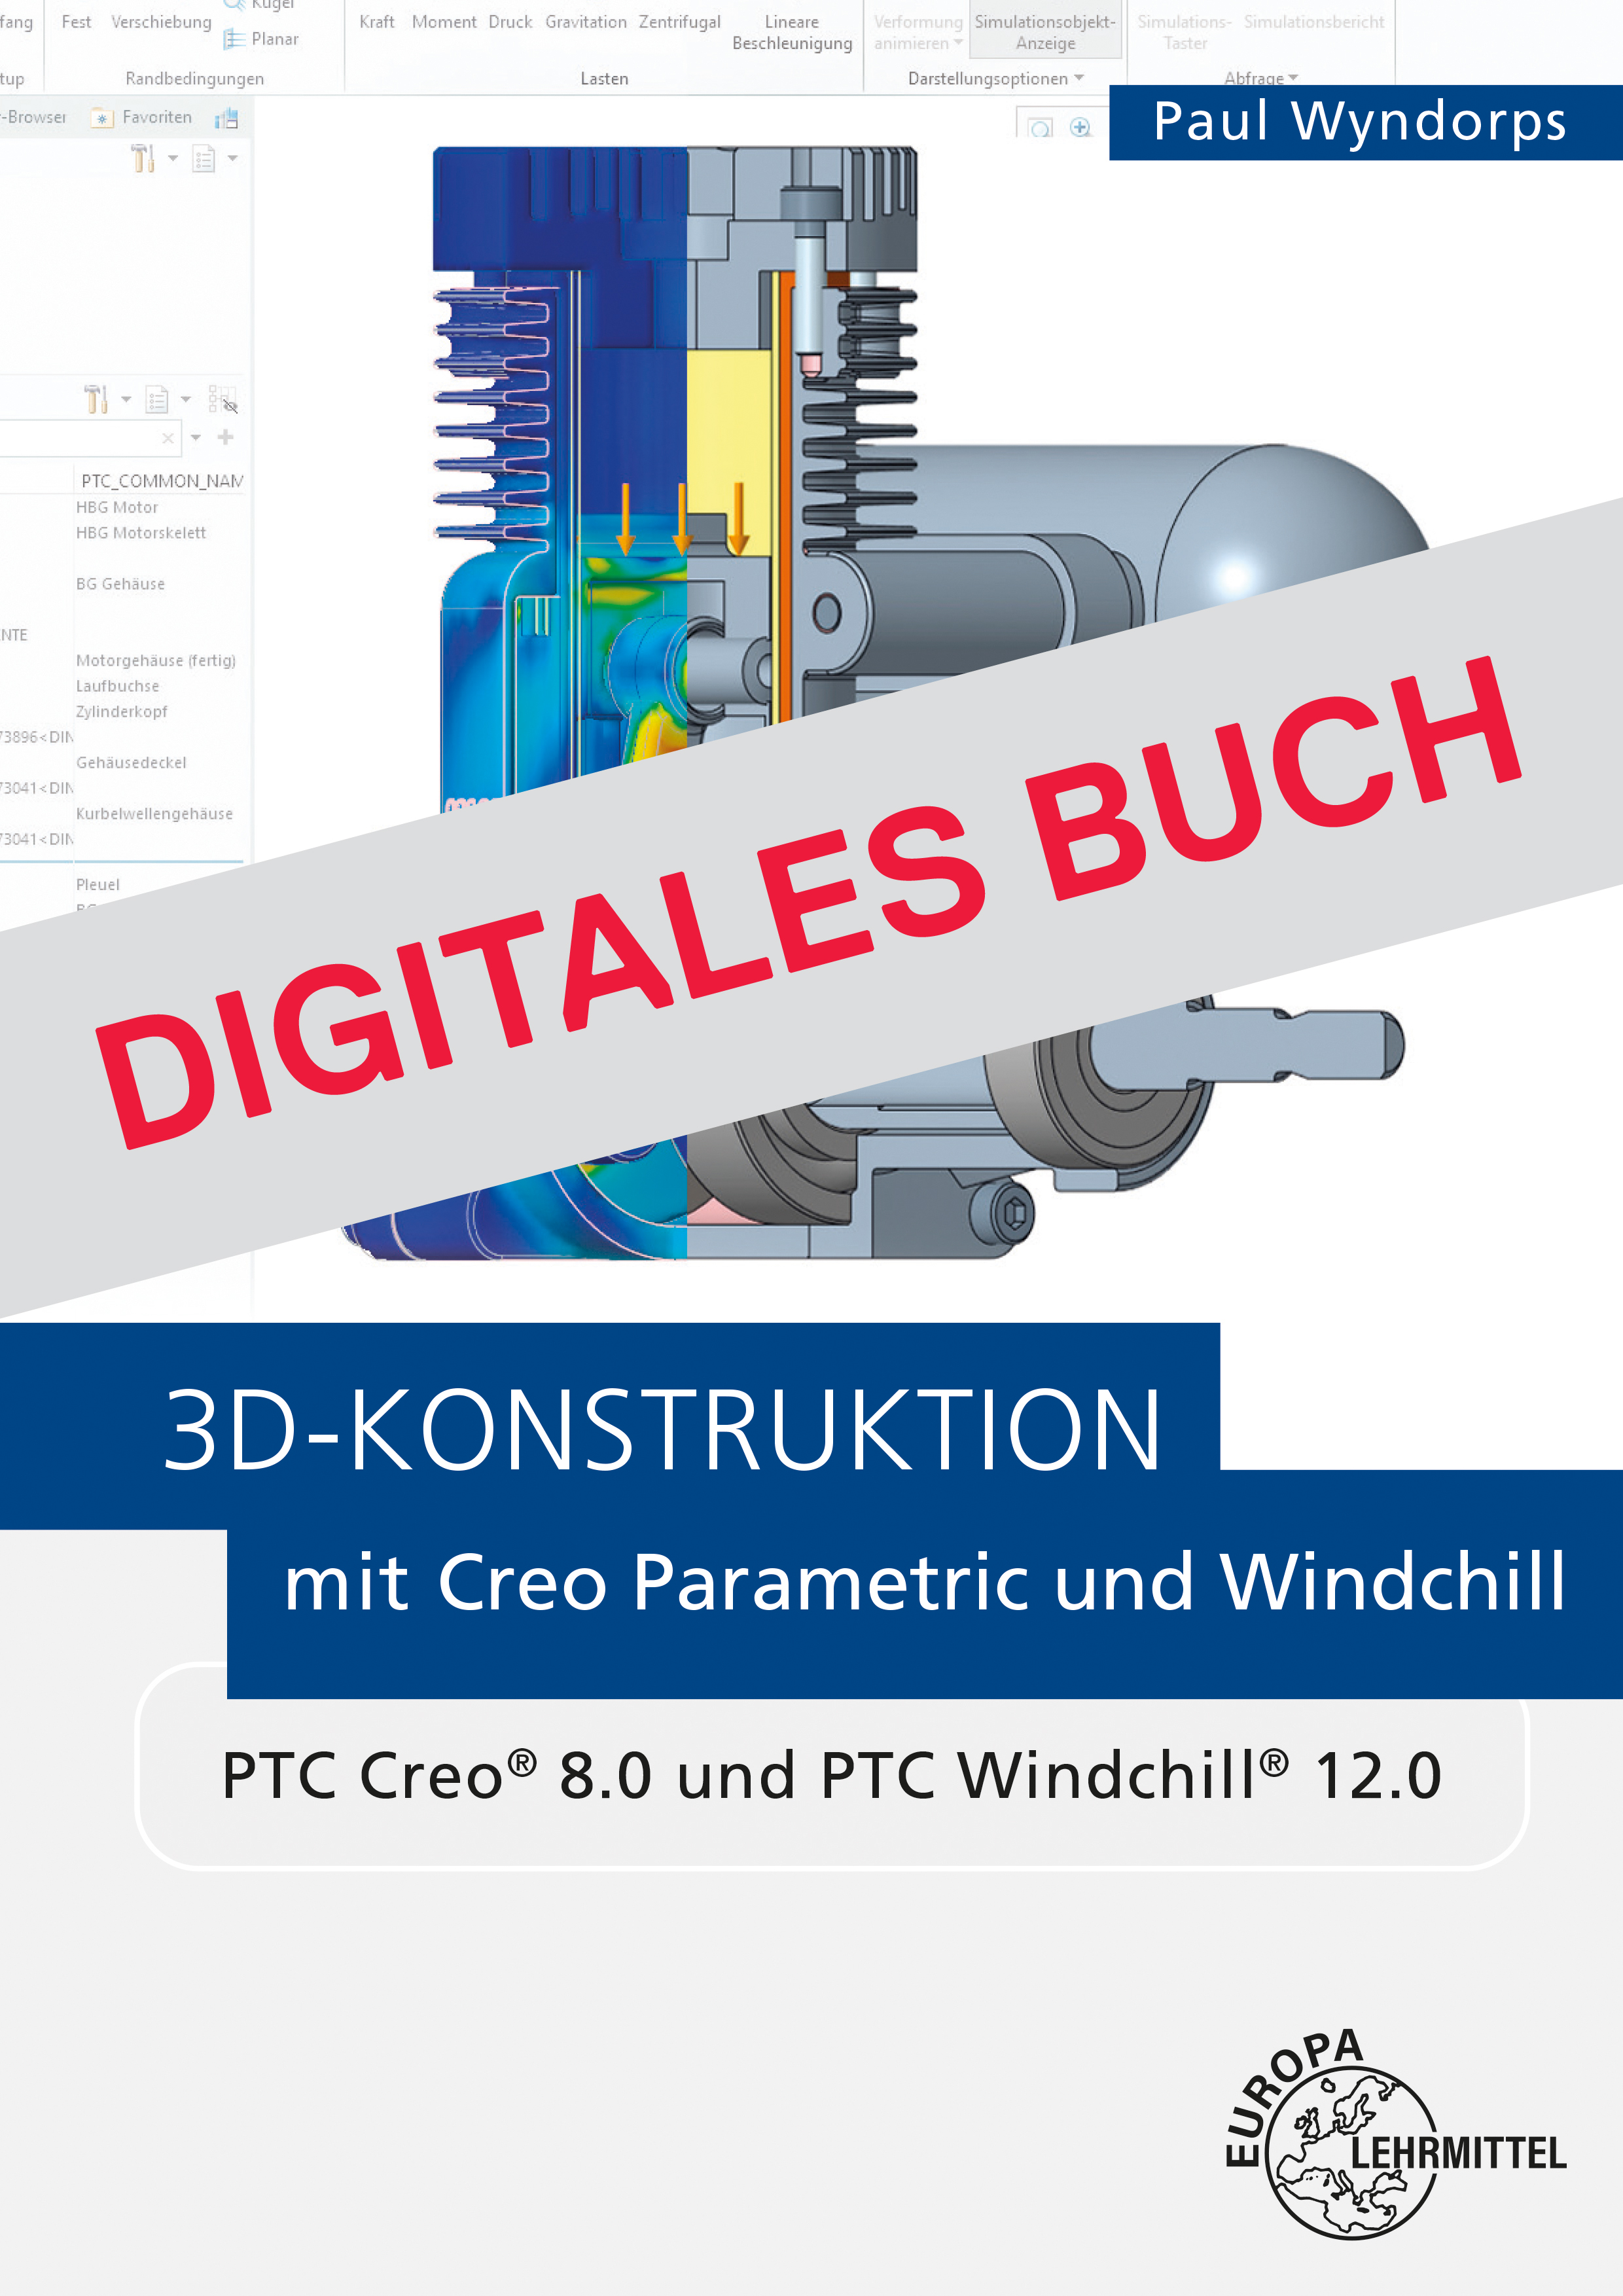 3D-Konstruktion mit Creo Parametric - Digitales Buch